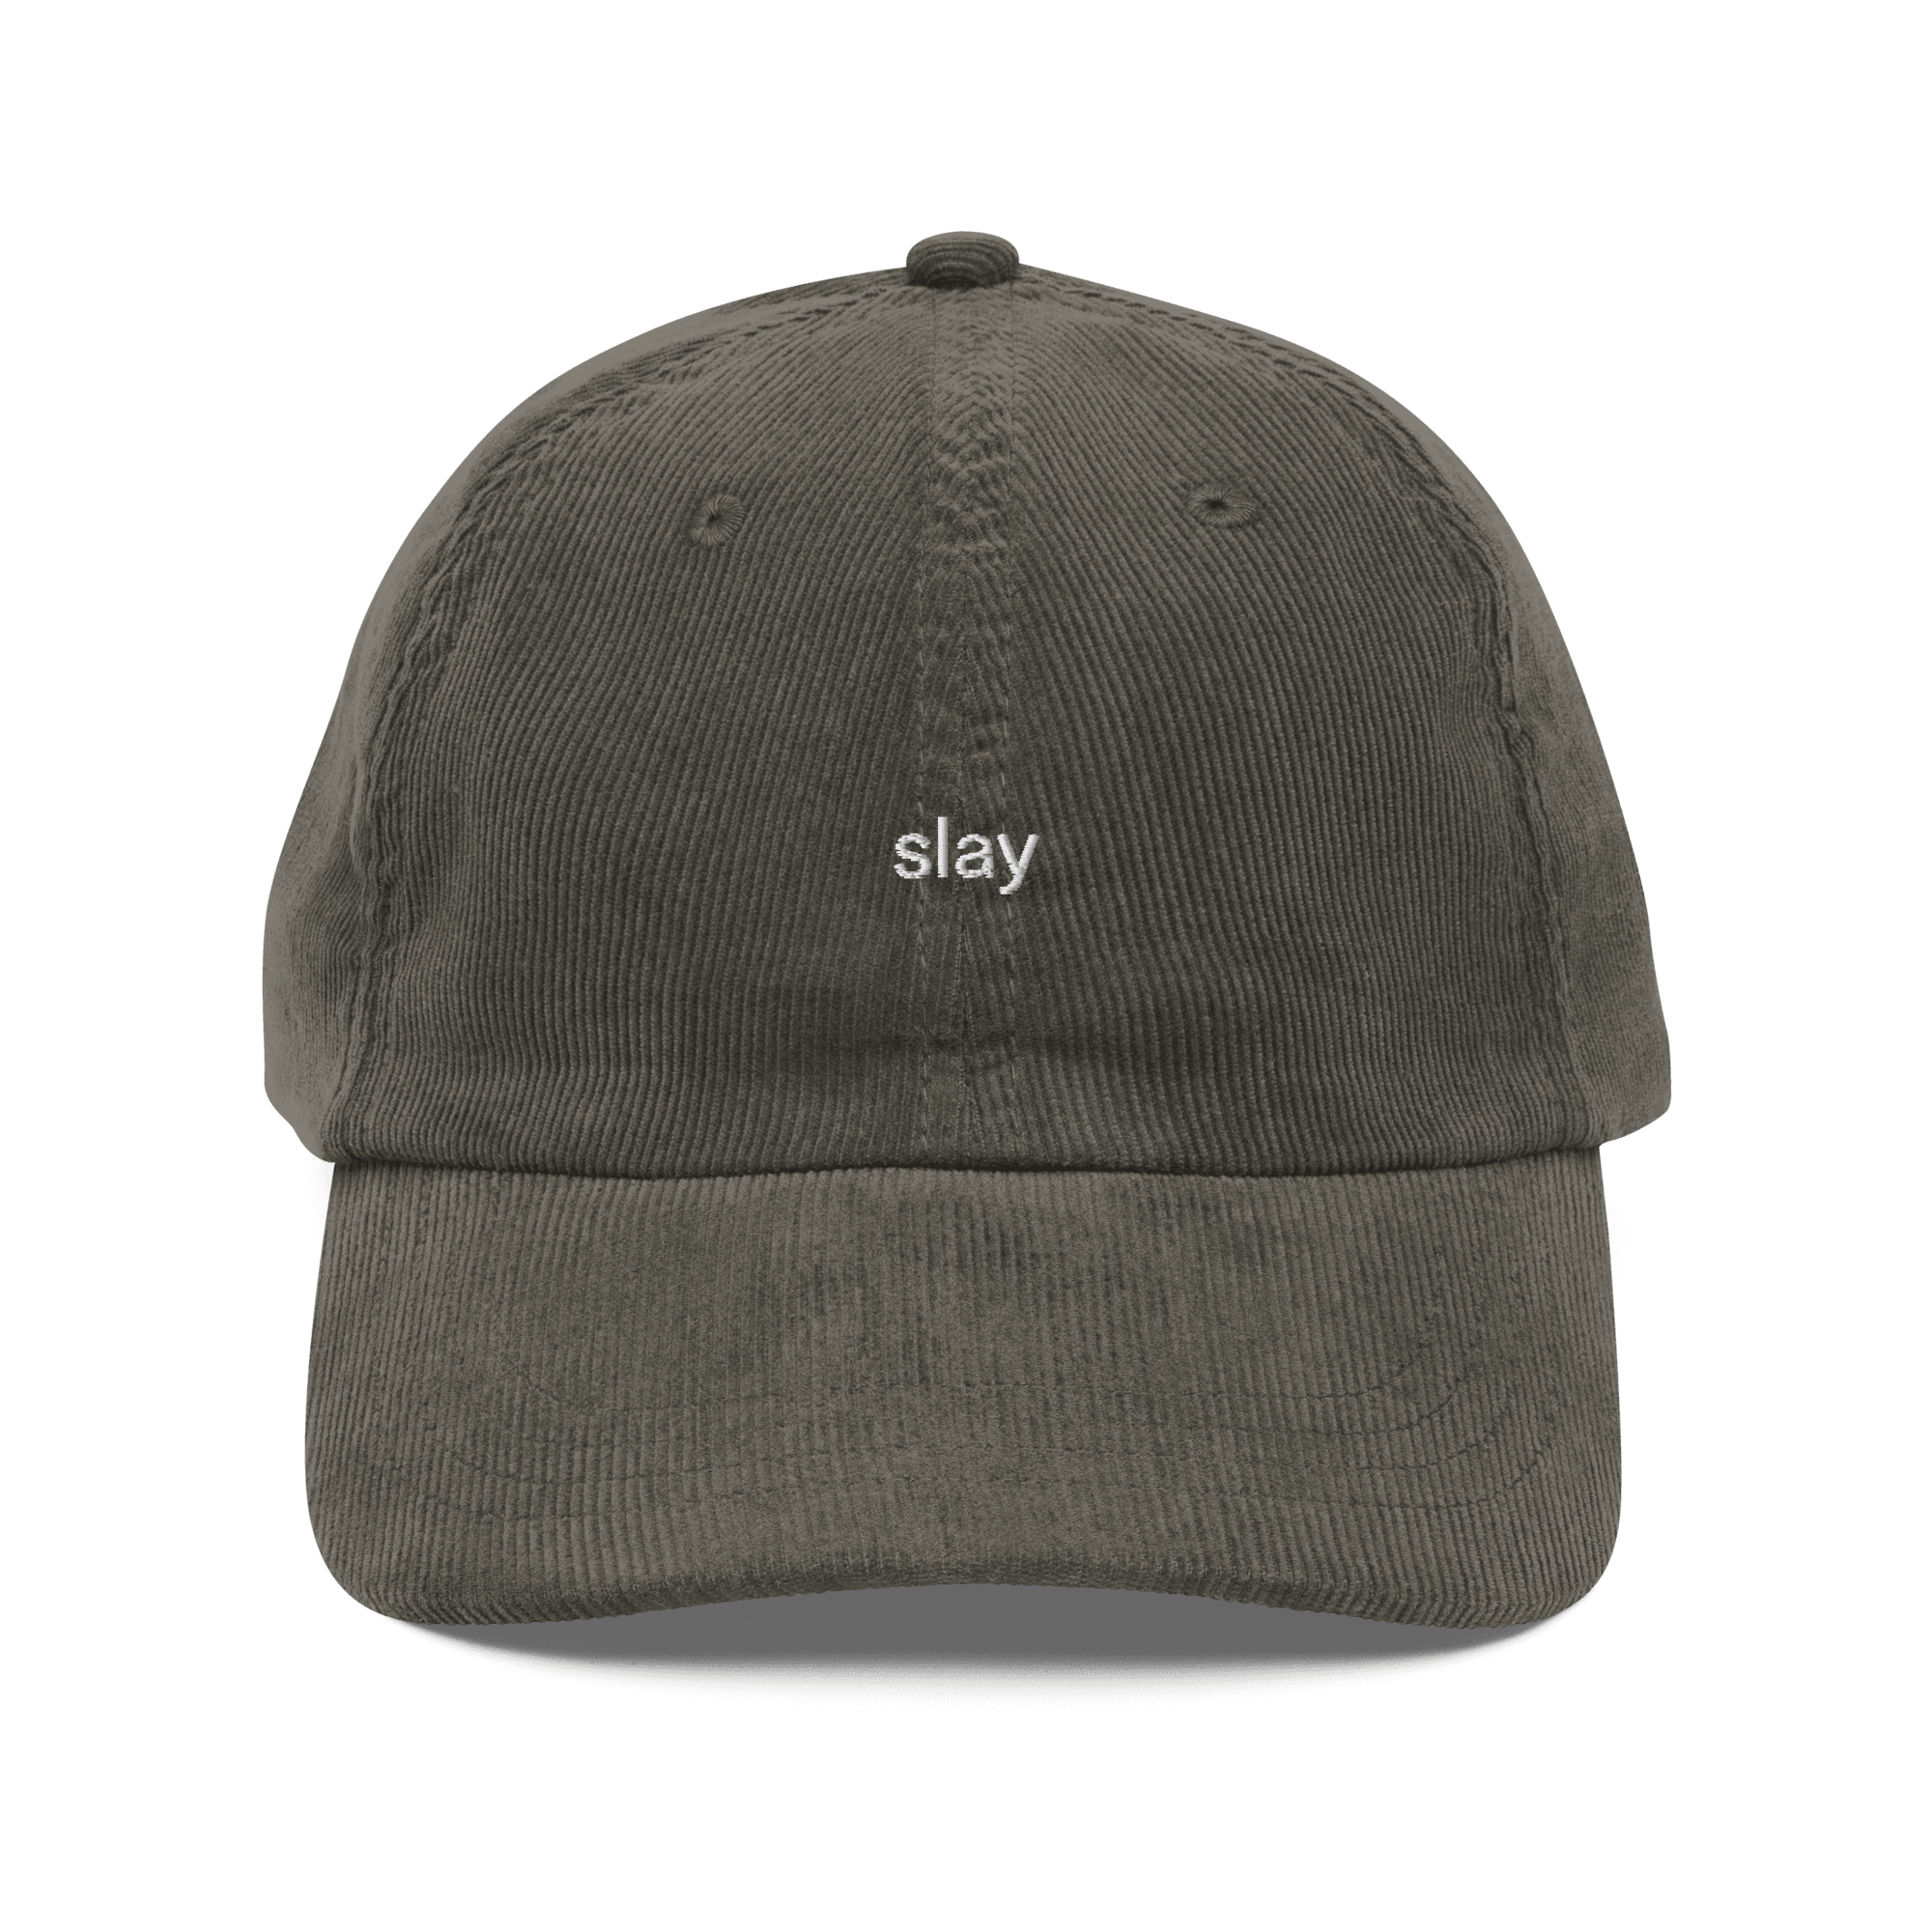 'slay' Vintage Corduroy Cap - Polychrome Goods 🍊